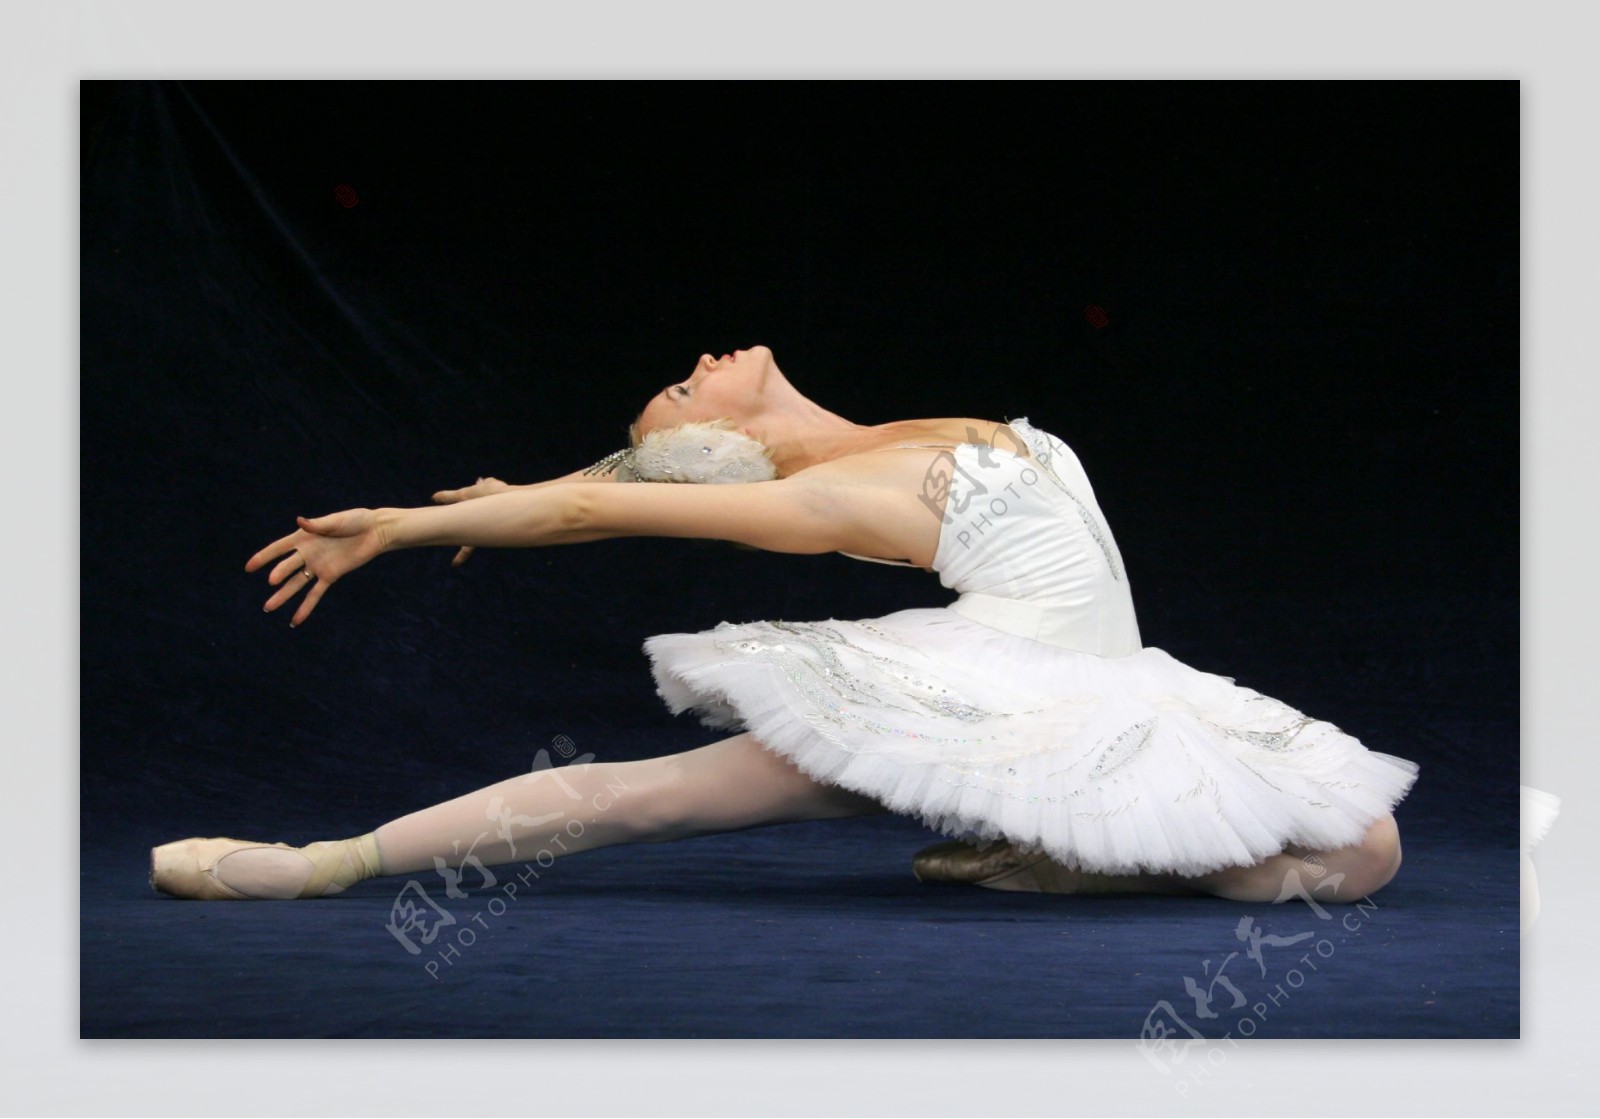 芭蕾舞者图片